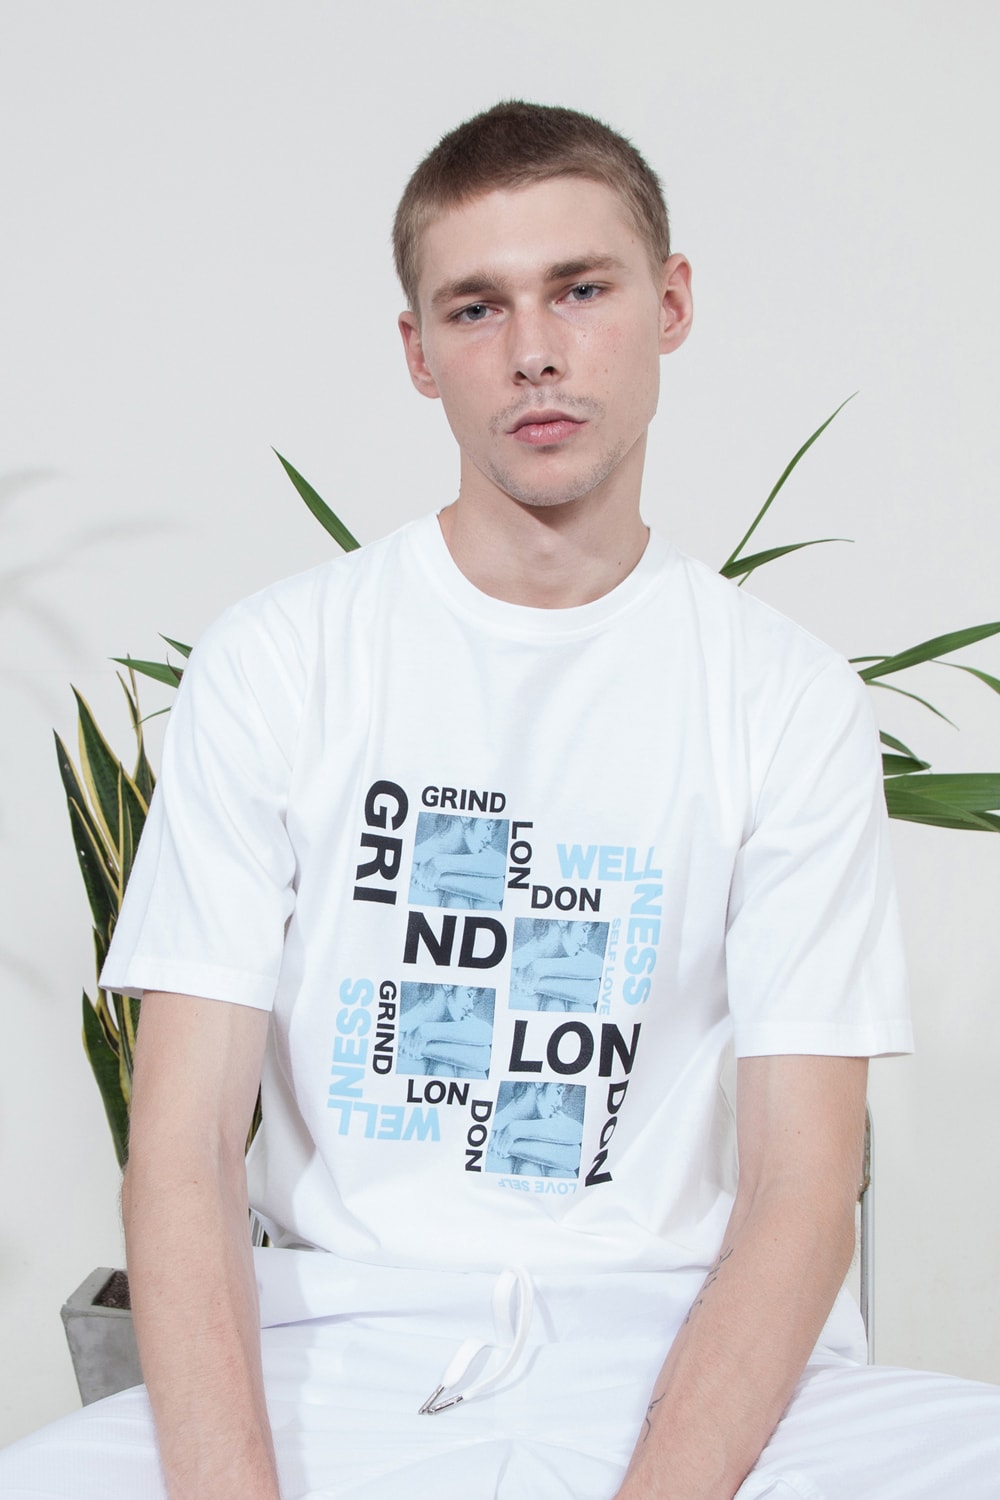 Grind London Wellness Spring/Summer 2018 fashion streetwear British label lookbooks Collections